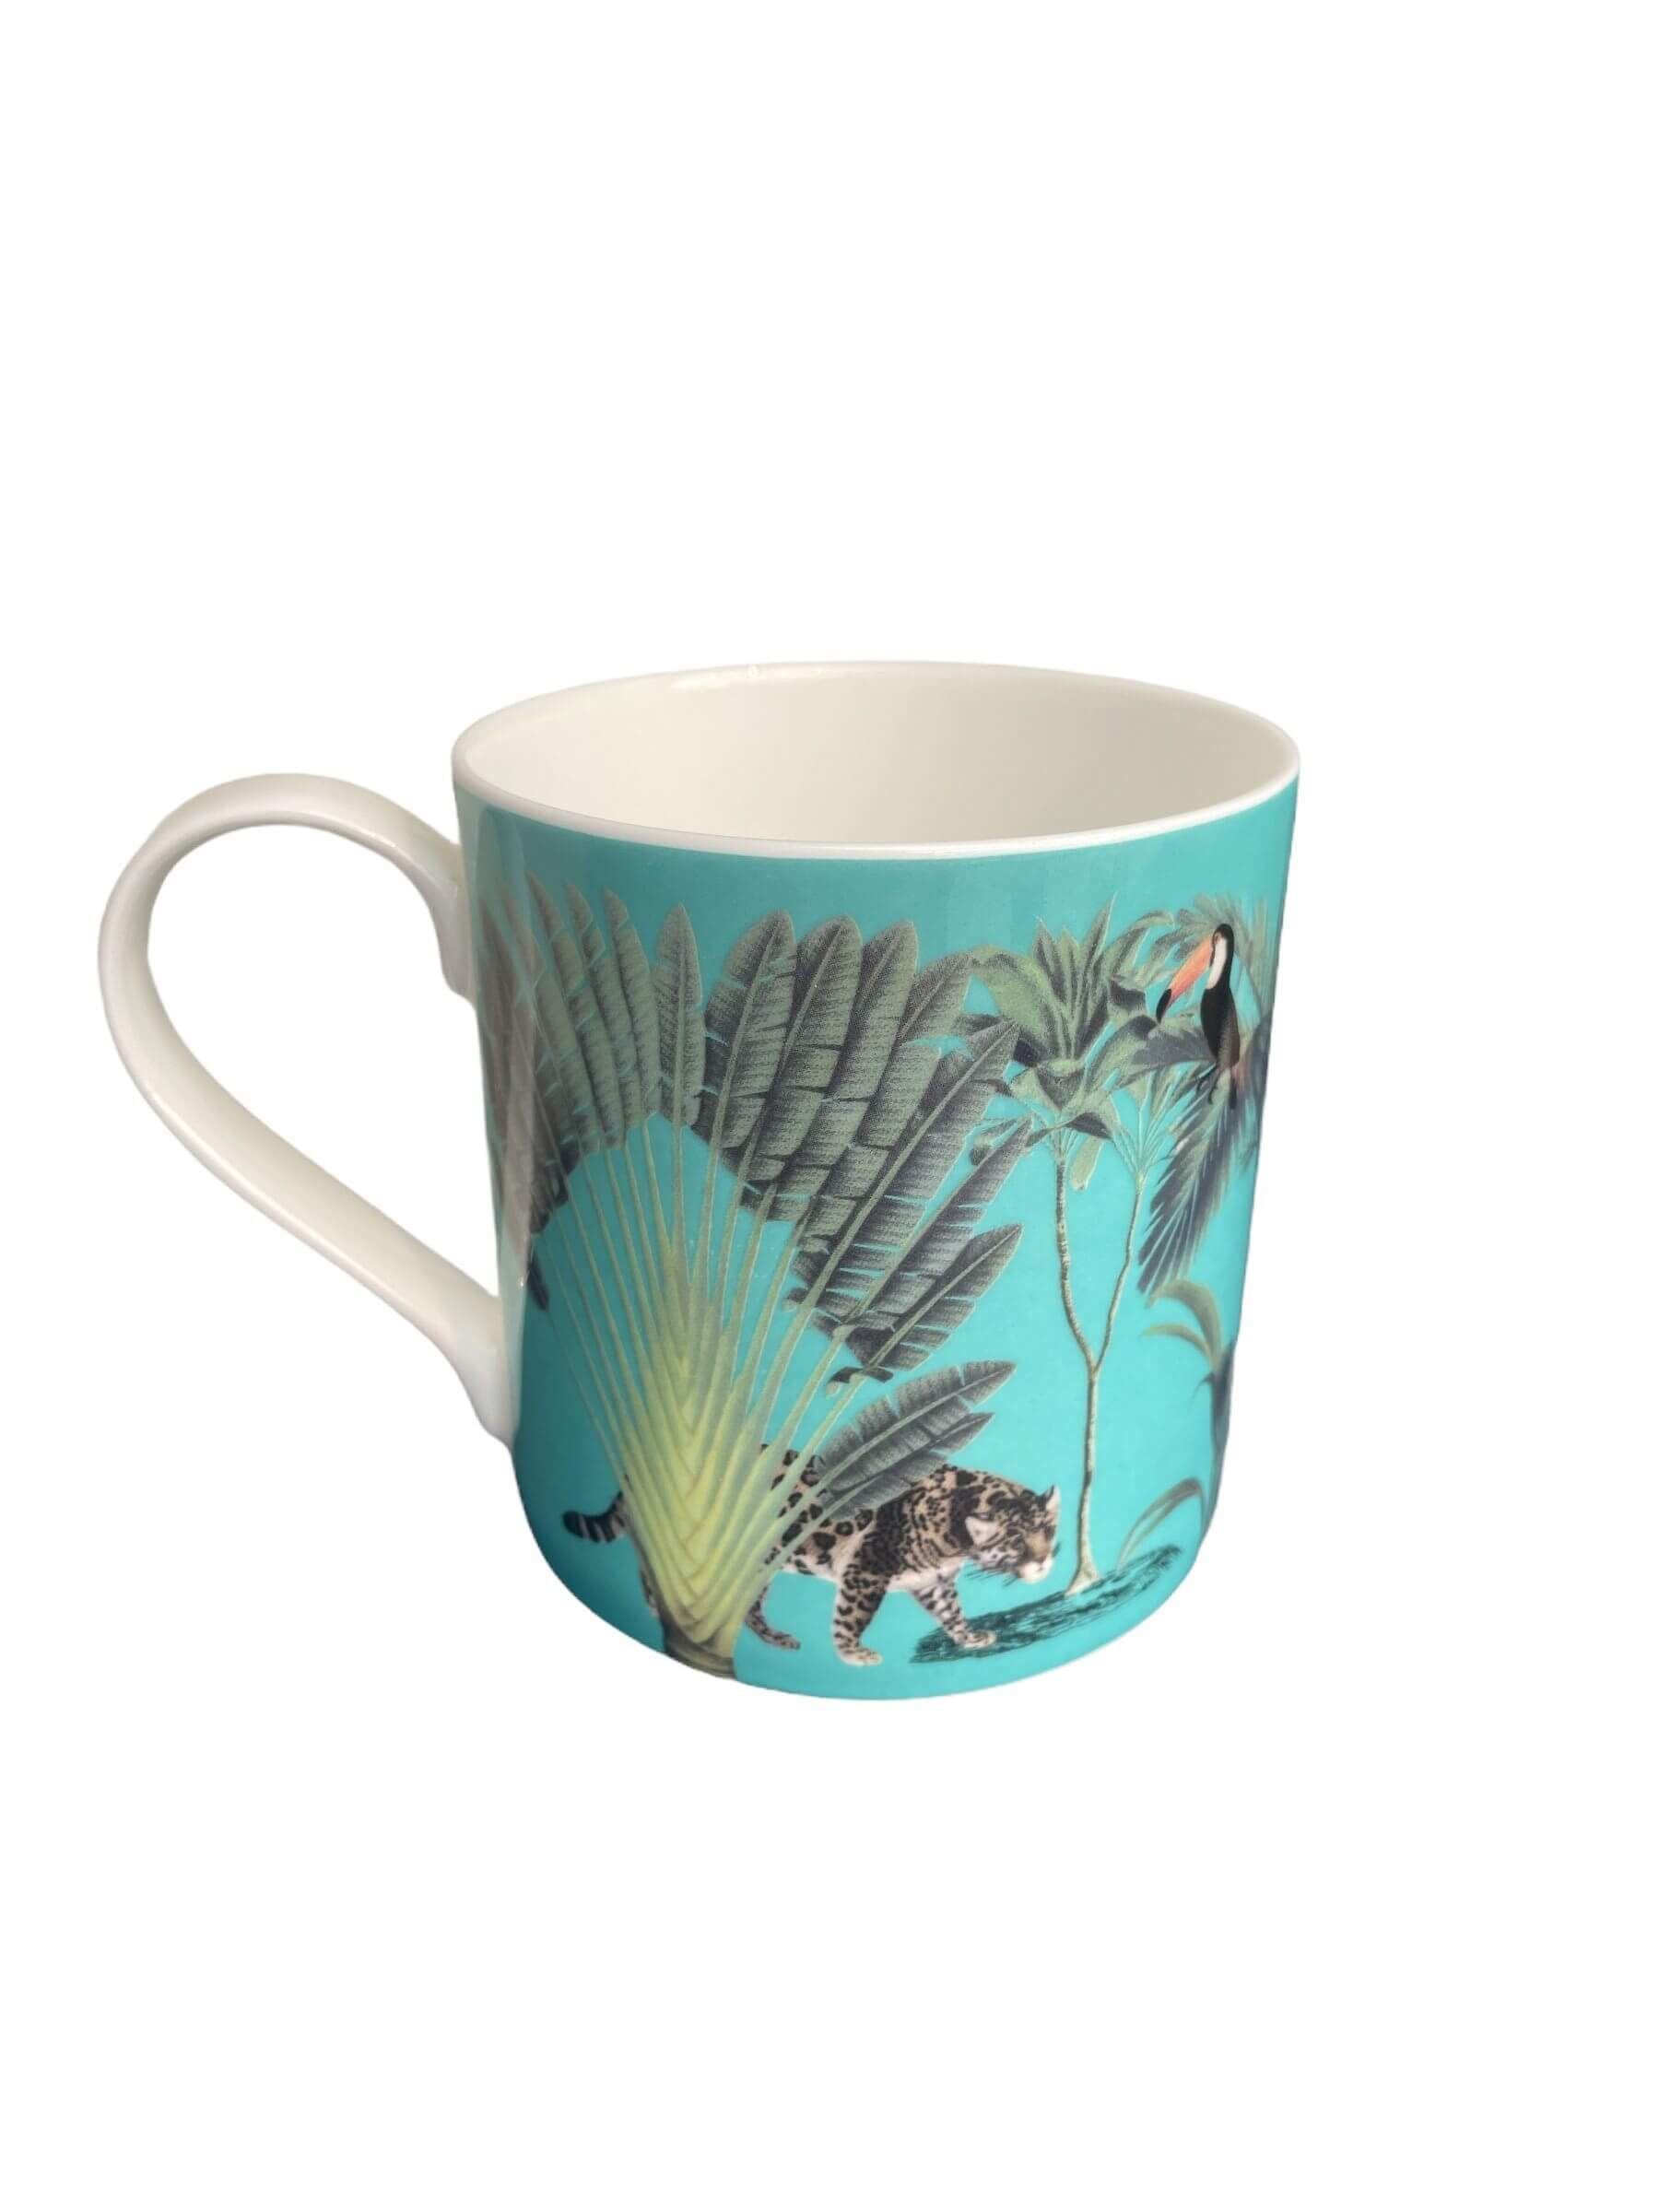 Darwin's Menagerie Mug Set (Six  Mugs) Mug Set Mustard and Gray Ltd Shropshire UK